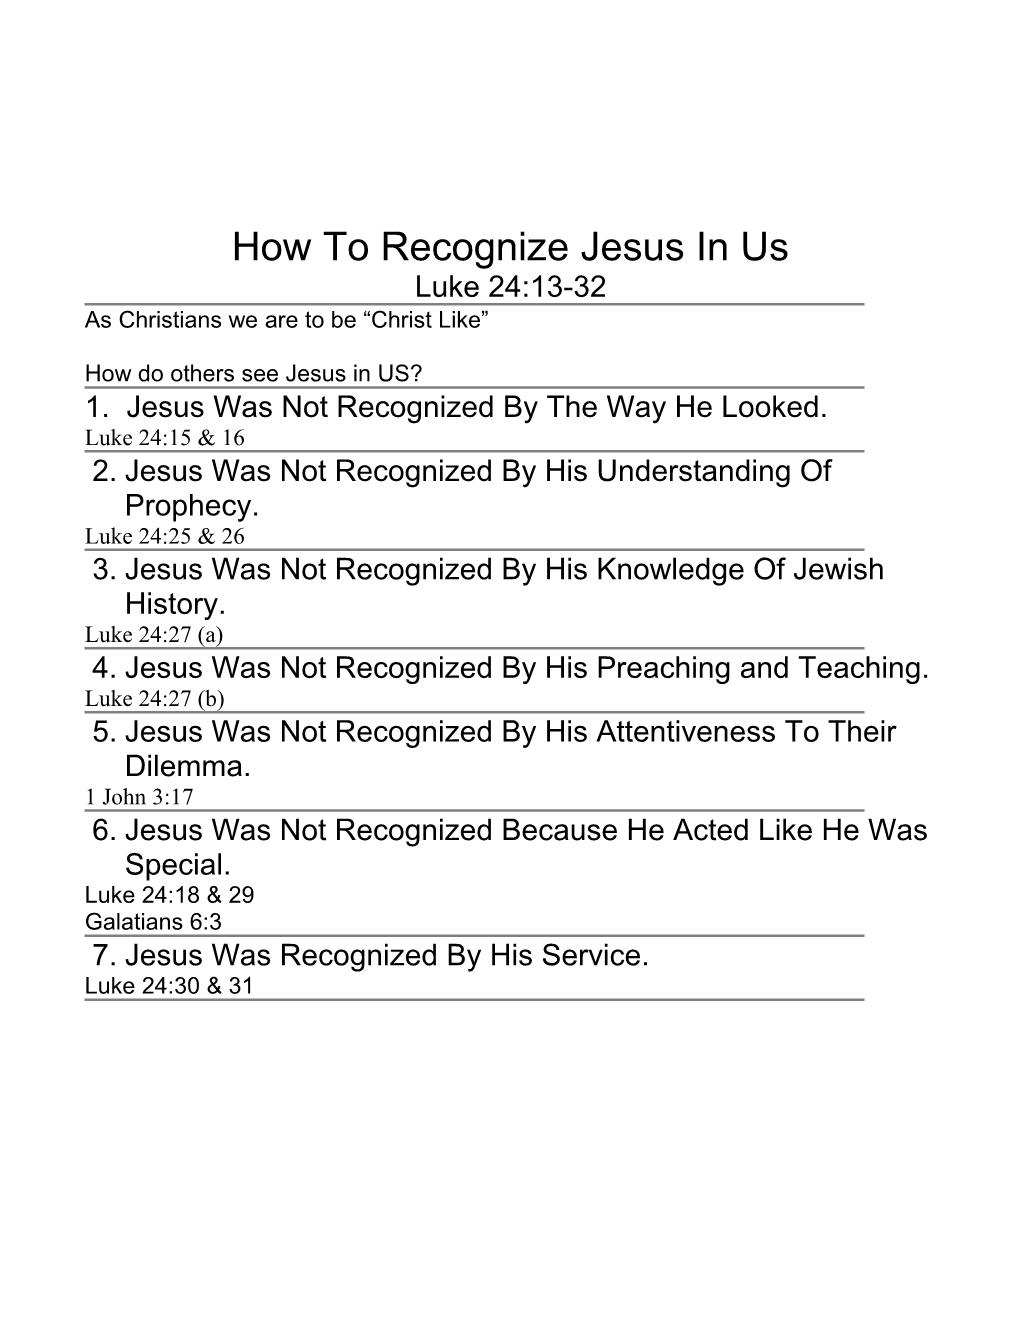 How to Recognize Jesus in Us